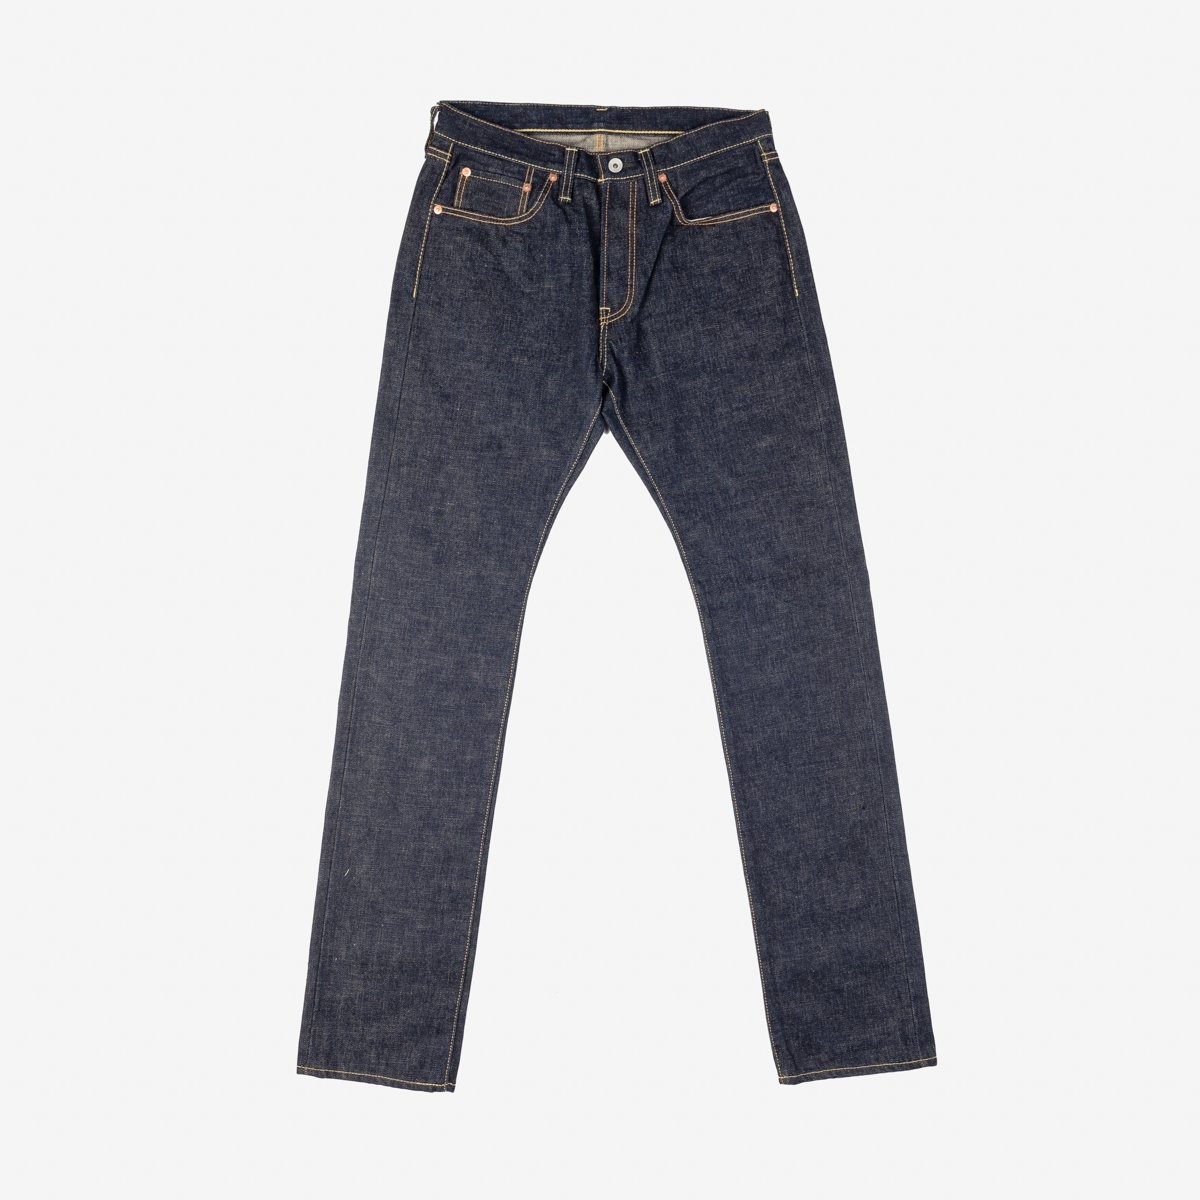 IH-555S-18 18oz Vintage Selvedge Denim Super Slim Cut Jeans - Indigo - 1